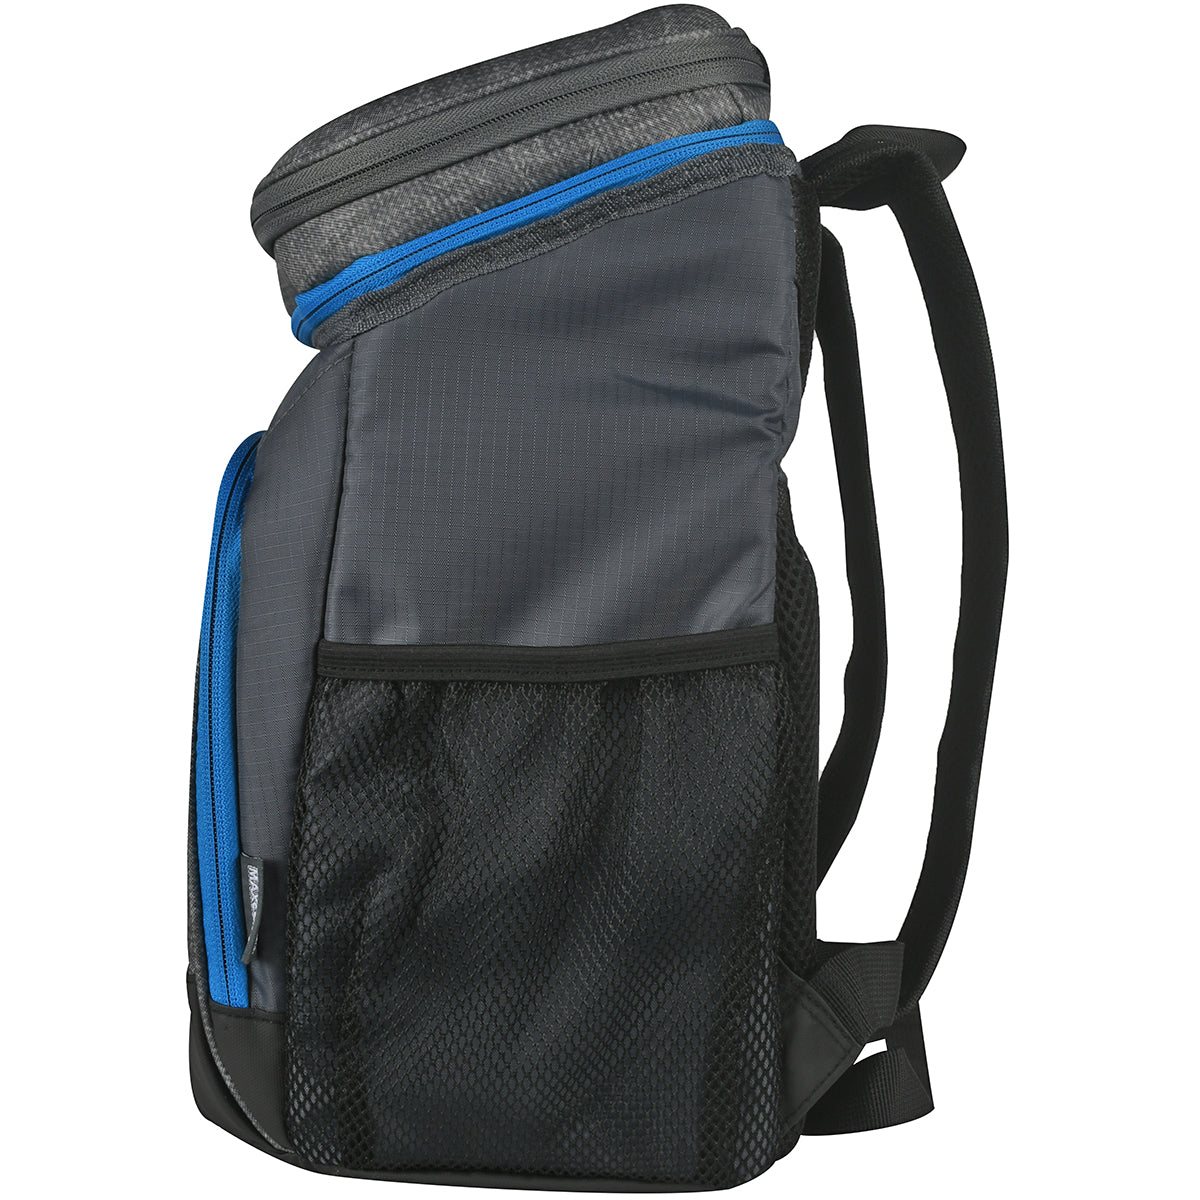 IGLOO MaxCold Insulated Cooler Backpack - Gray IGLOO